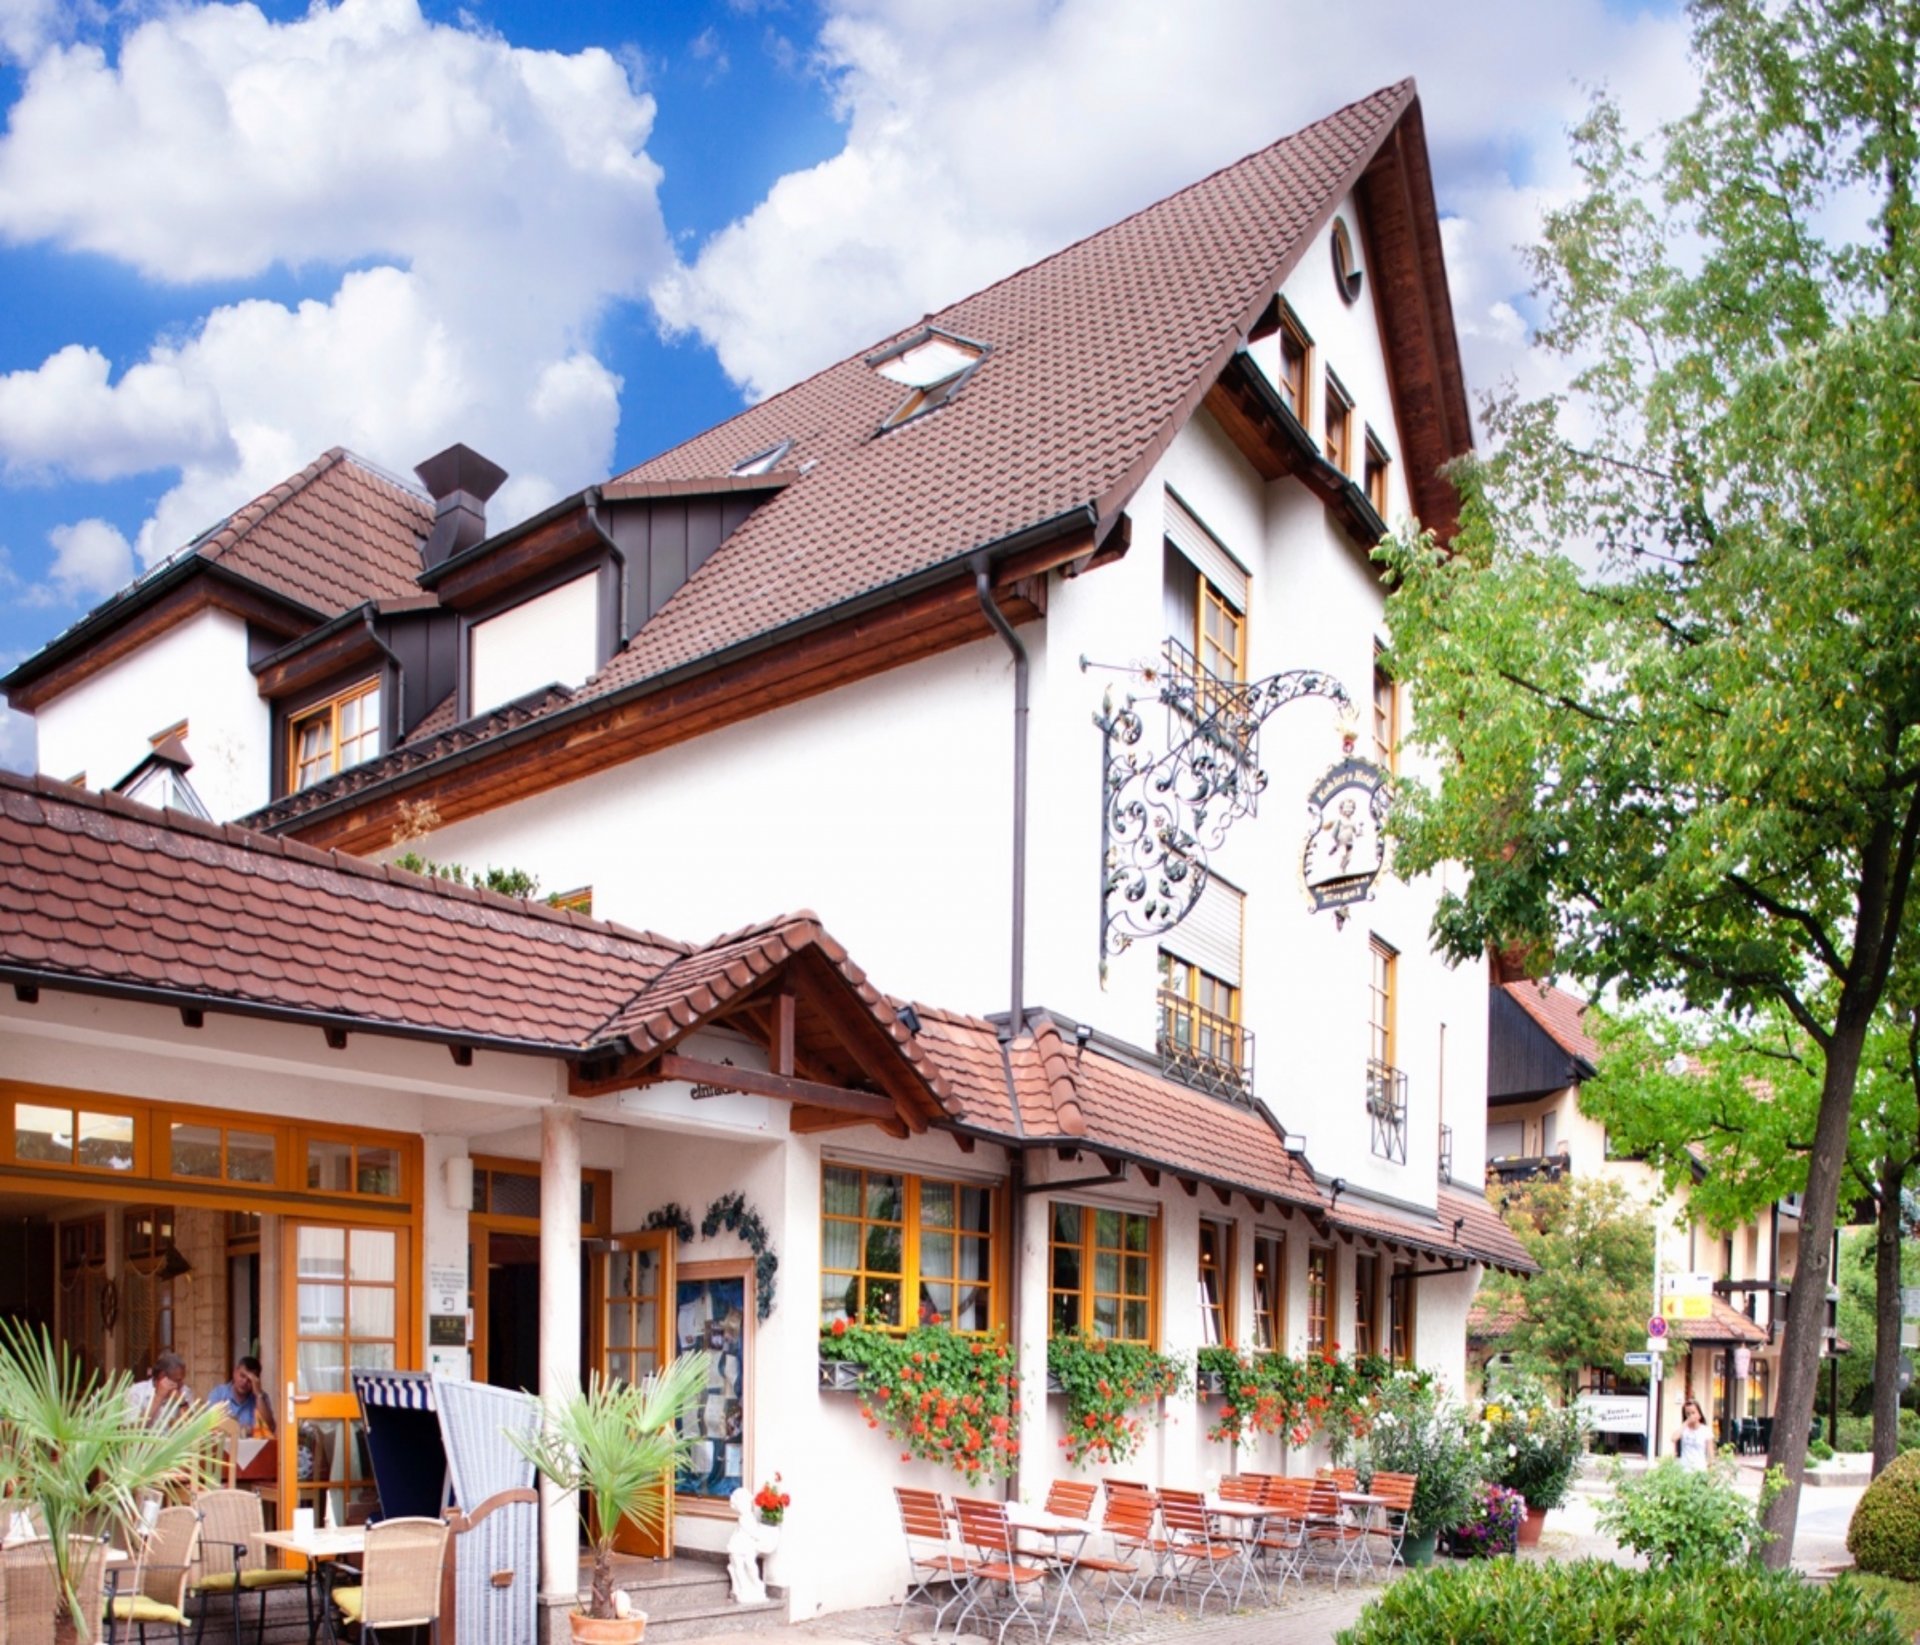 3 Tage Wanderslust – Kohlers Hotel Engel (3.5 Sterne) in Bühl, Baden-Württemberg inkl. All Inclusive